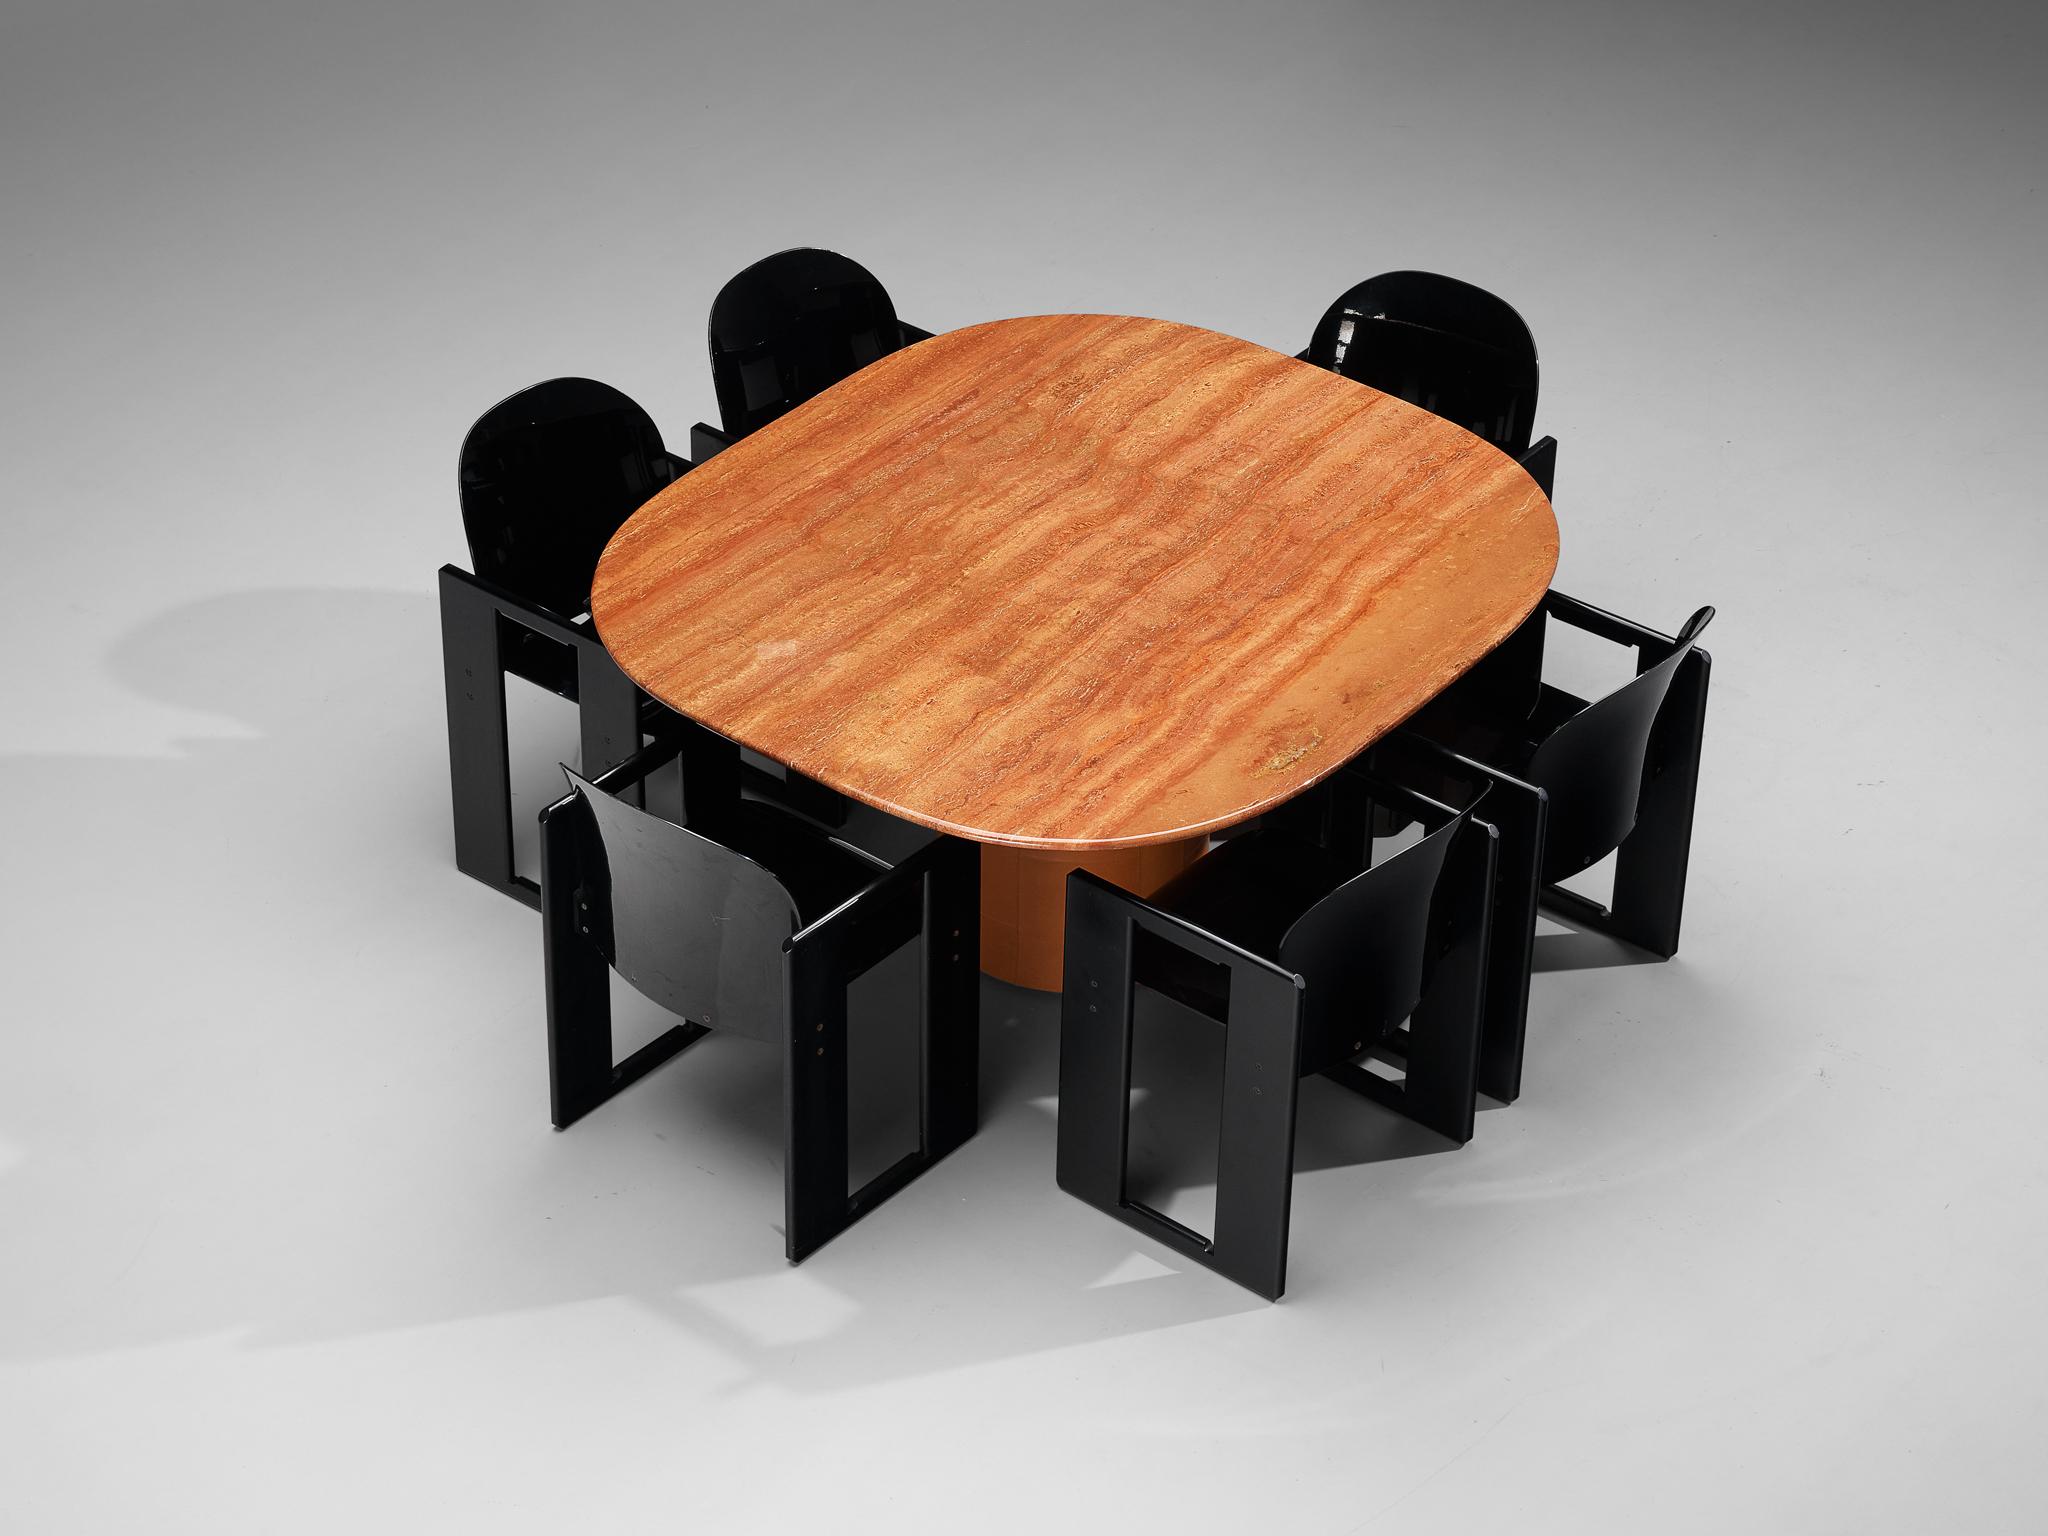 Italian Afra & Tobia Scarpa for B&B Italia 'Tobio' Dining Table with Dialogo Chairs